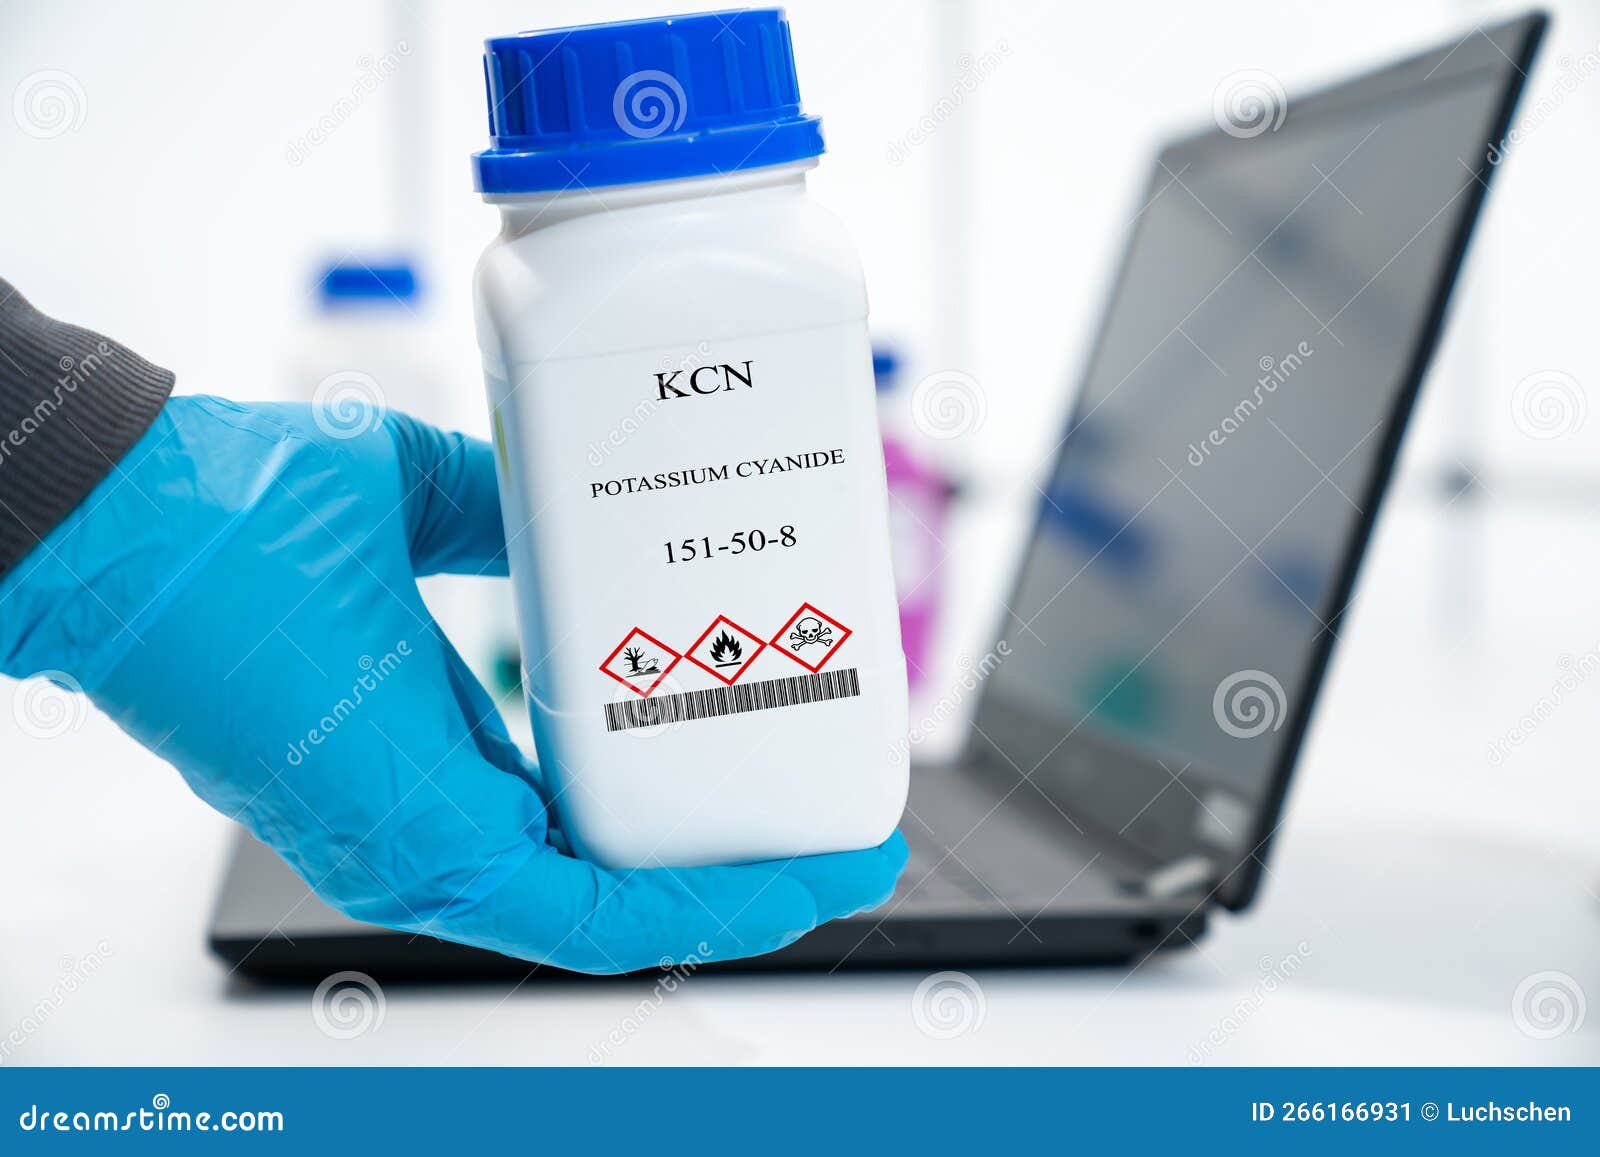 Potassium Cyanide, KCN